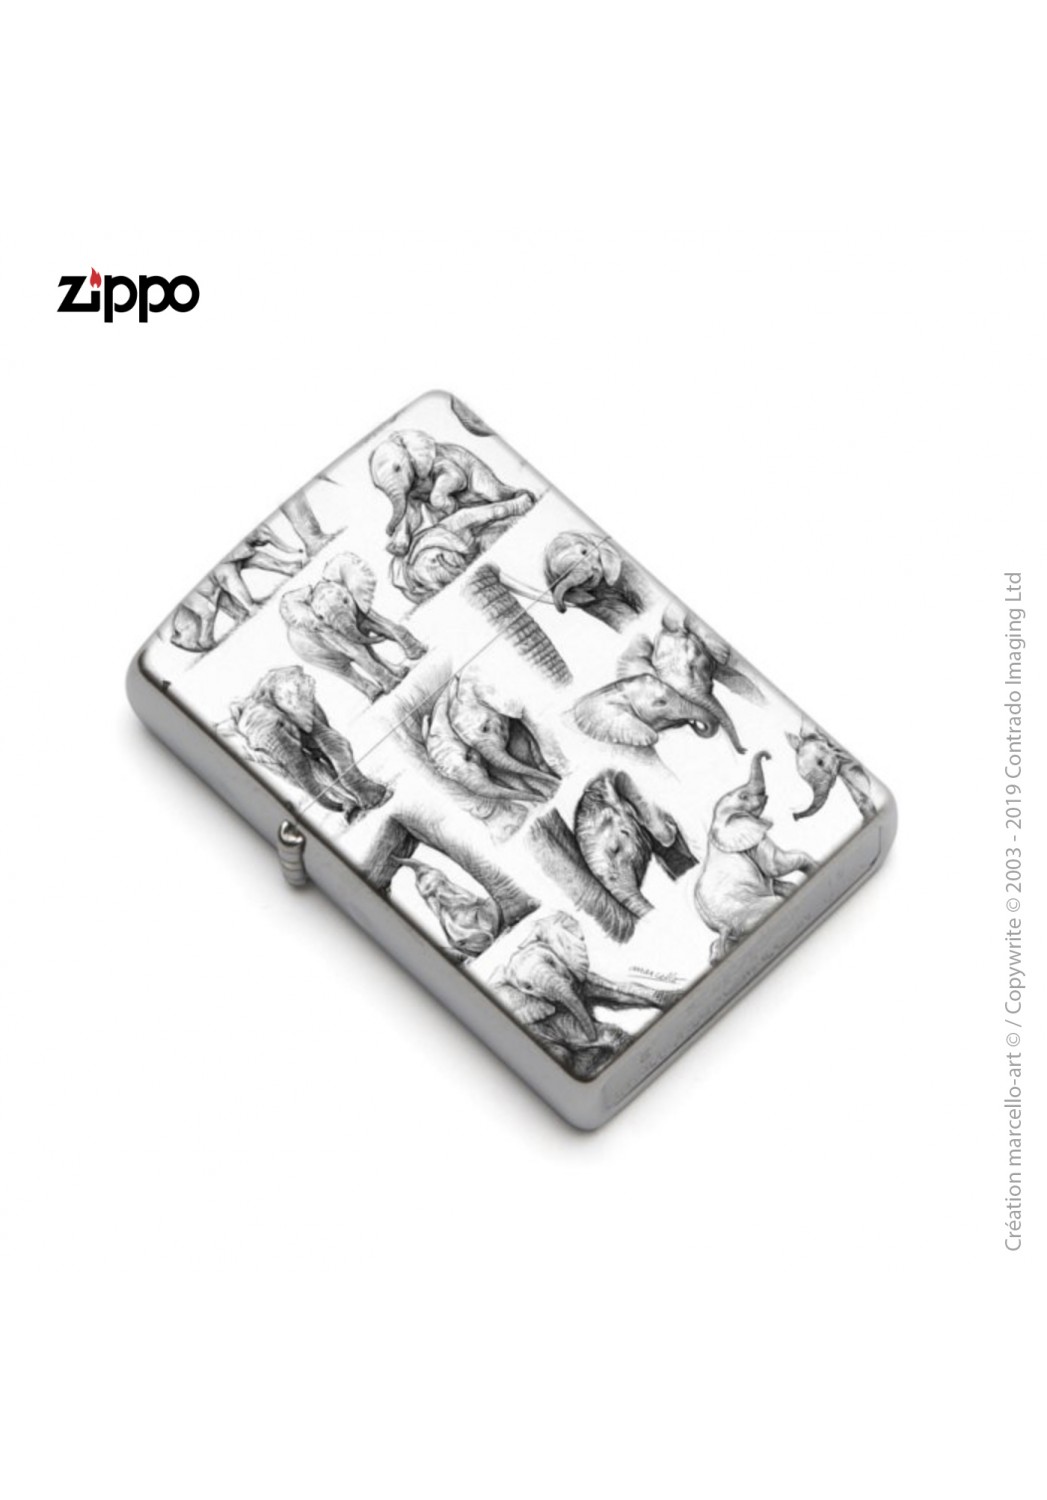 Marcello-art: Decoration accessoiries Zippo 392 baby elephant